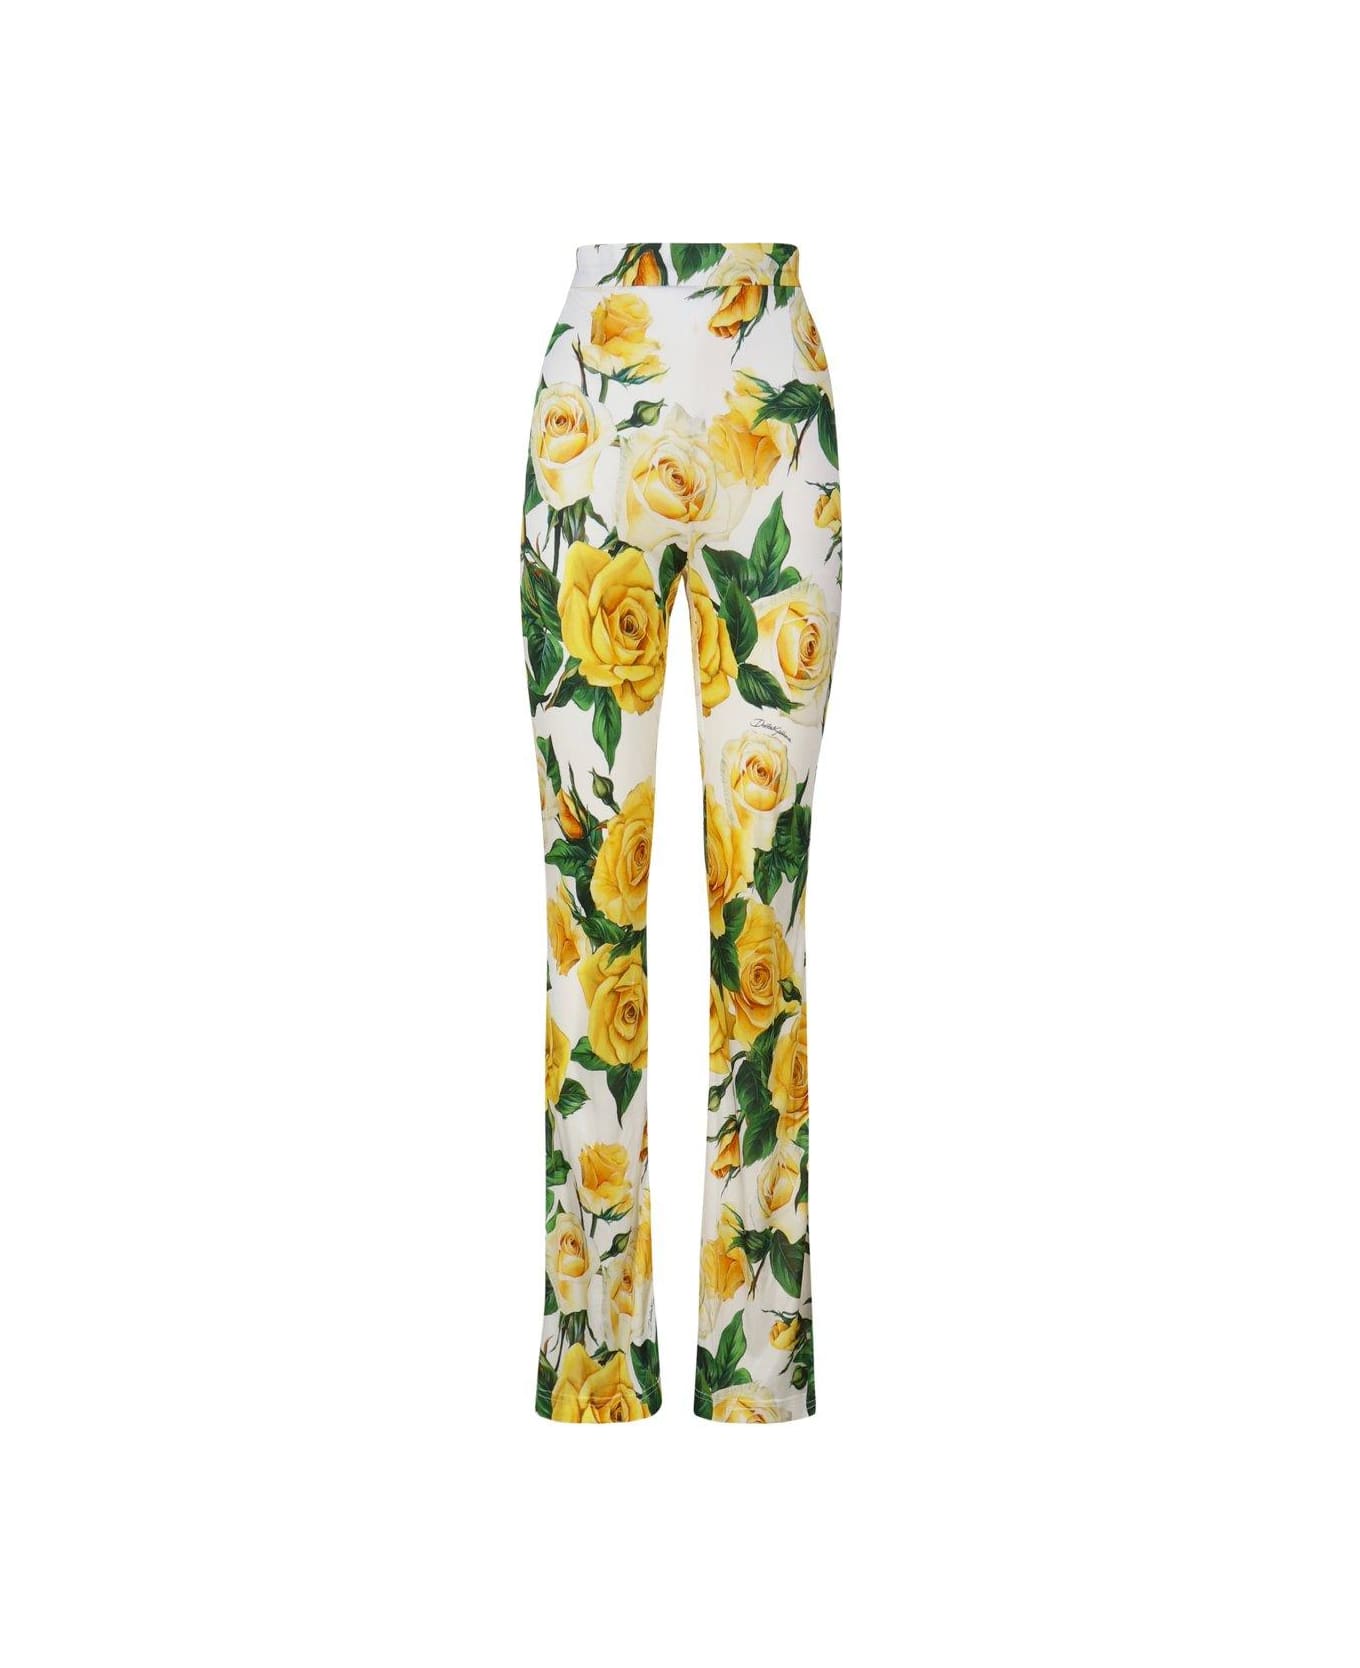 Dolce & Gabbana Rose Printed High Waist Pants - Yellow, green, white